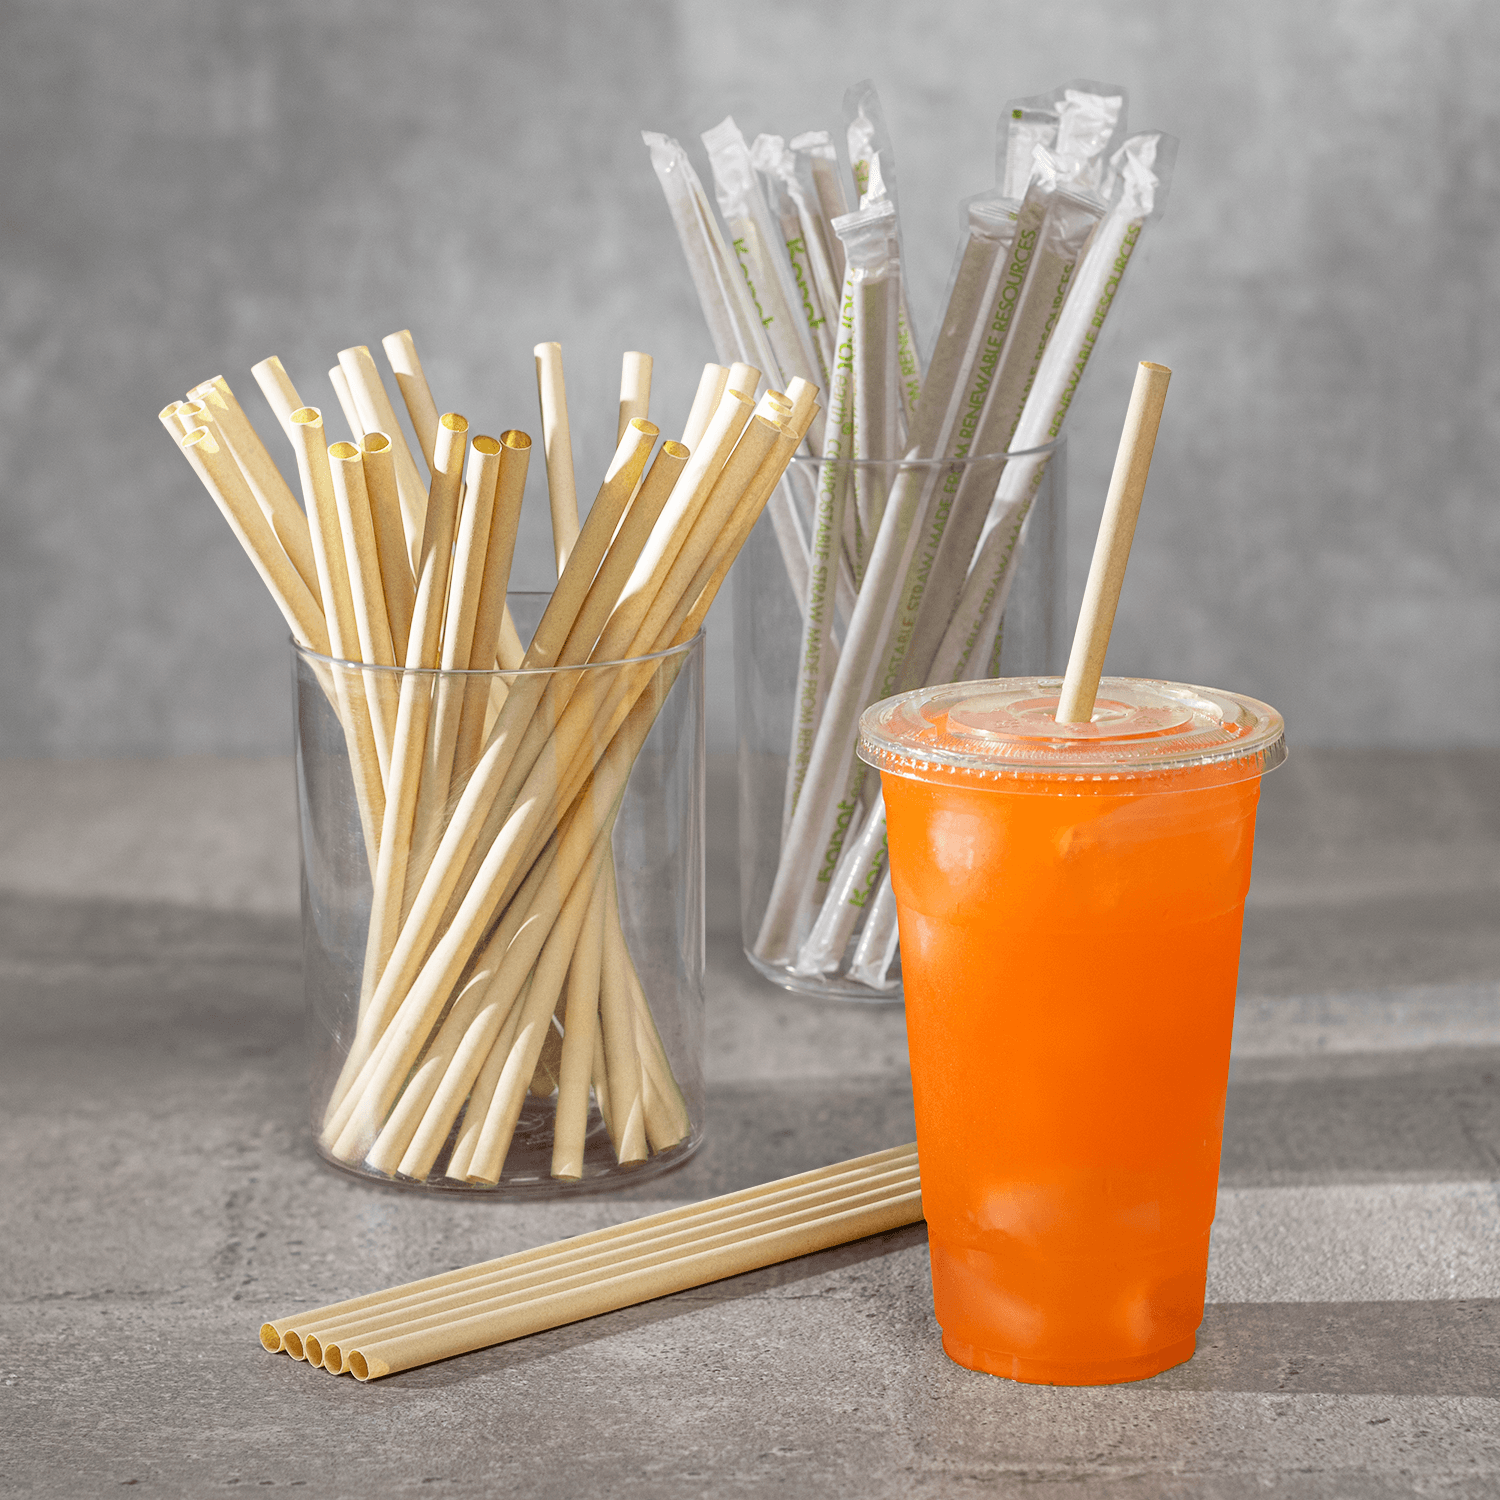 Karat Earth Flat Cut Bamboo Fiber Giant 9” Straw in Orange Drink